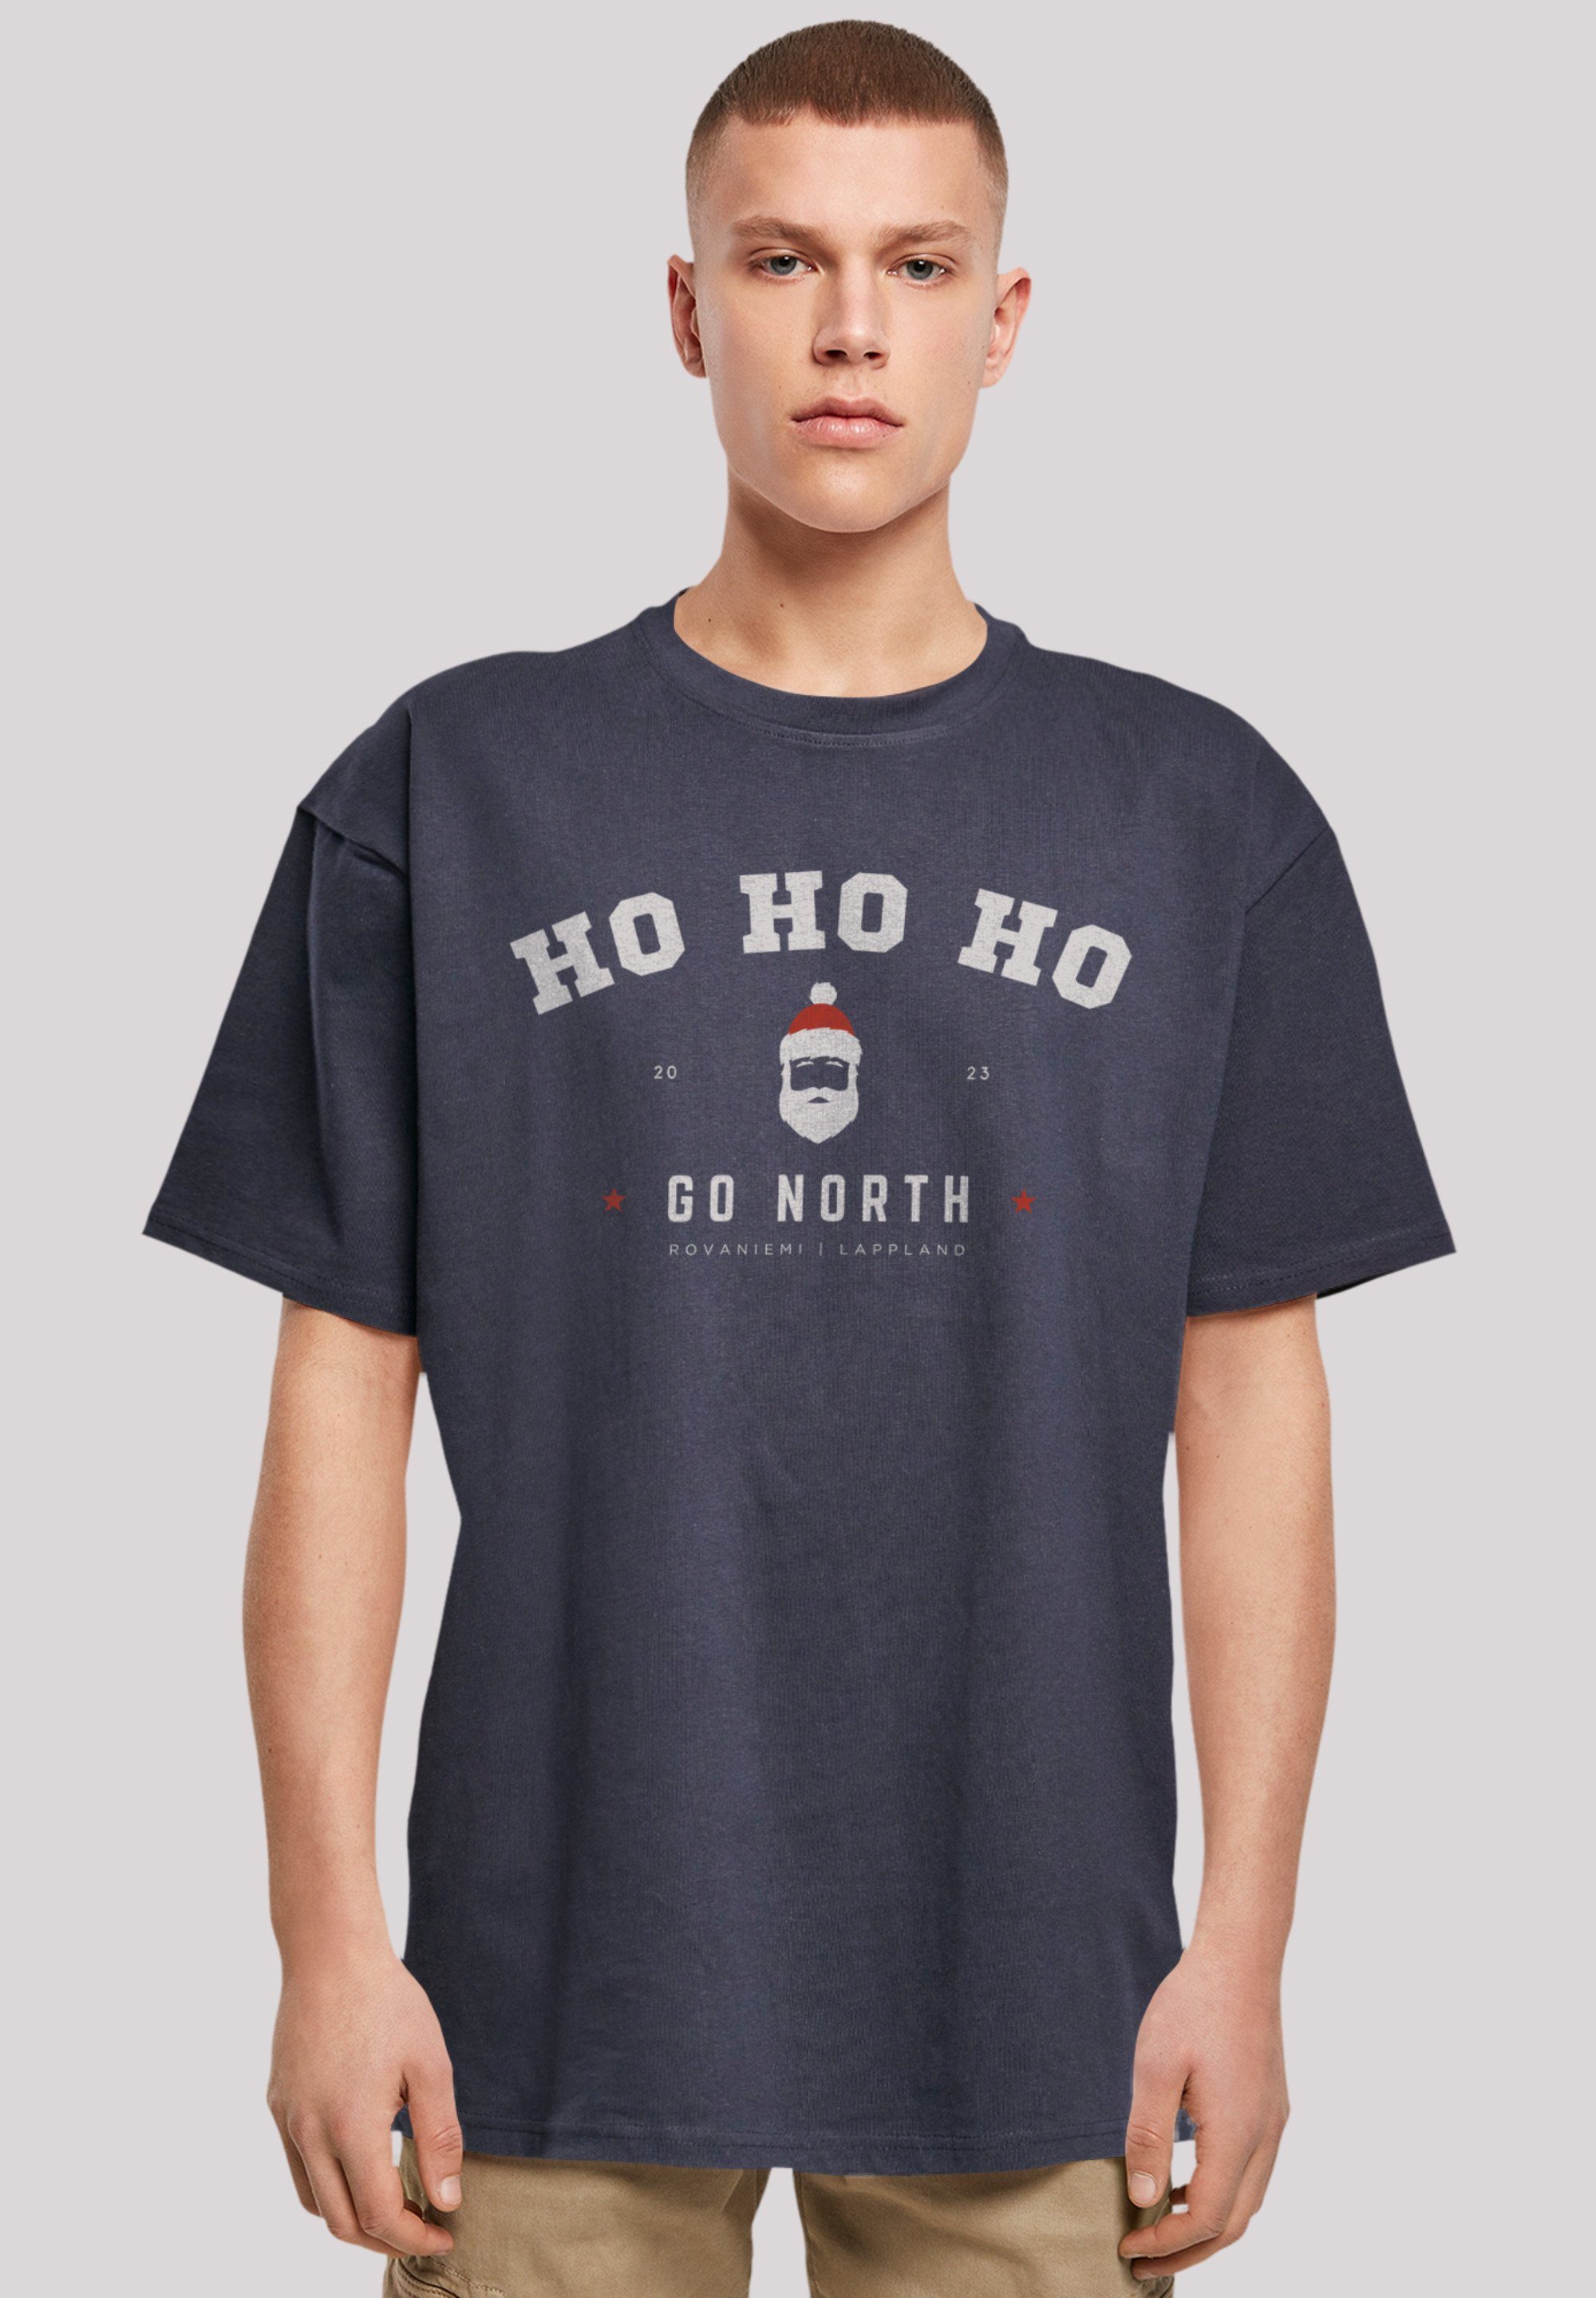 F4NT4STIC T-Shirt Ho Ho Logo Santa Geschenk, Weihnachten, Weihnachten Claus navy Ho